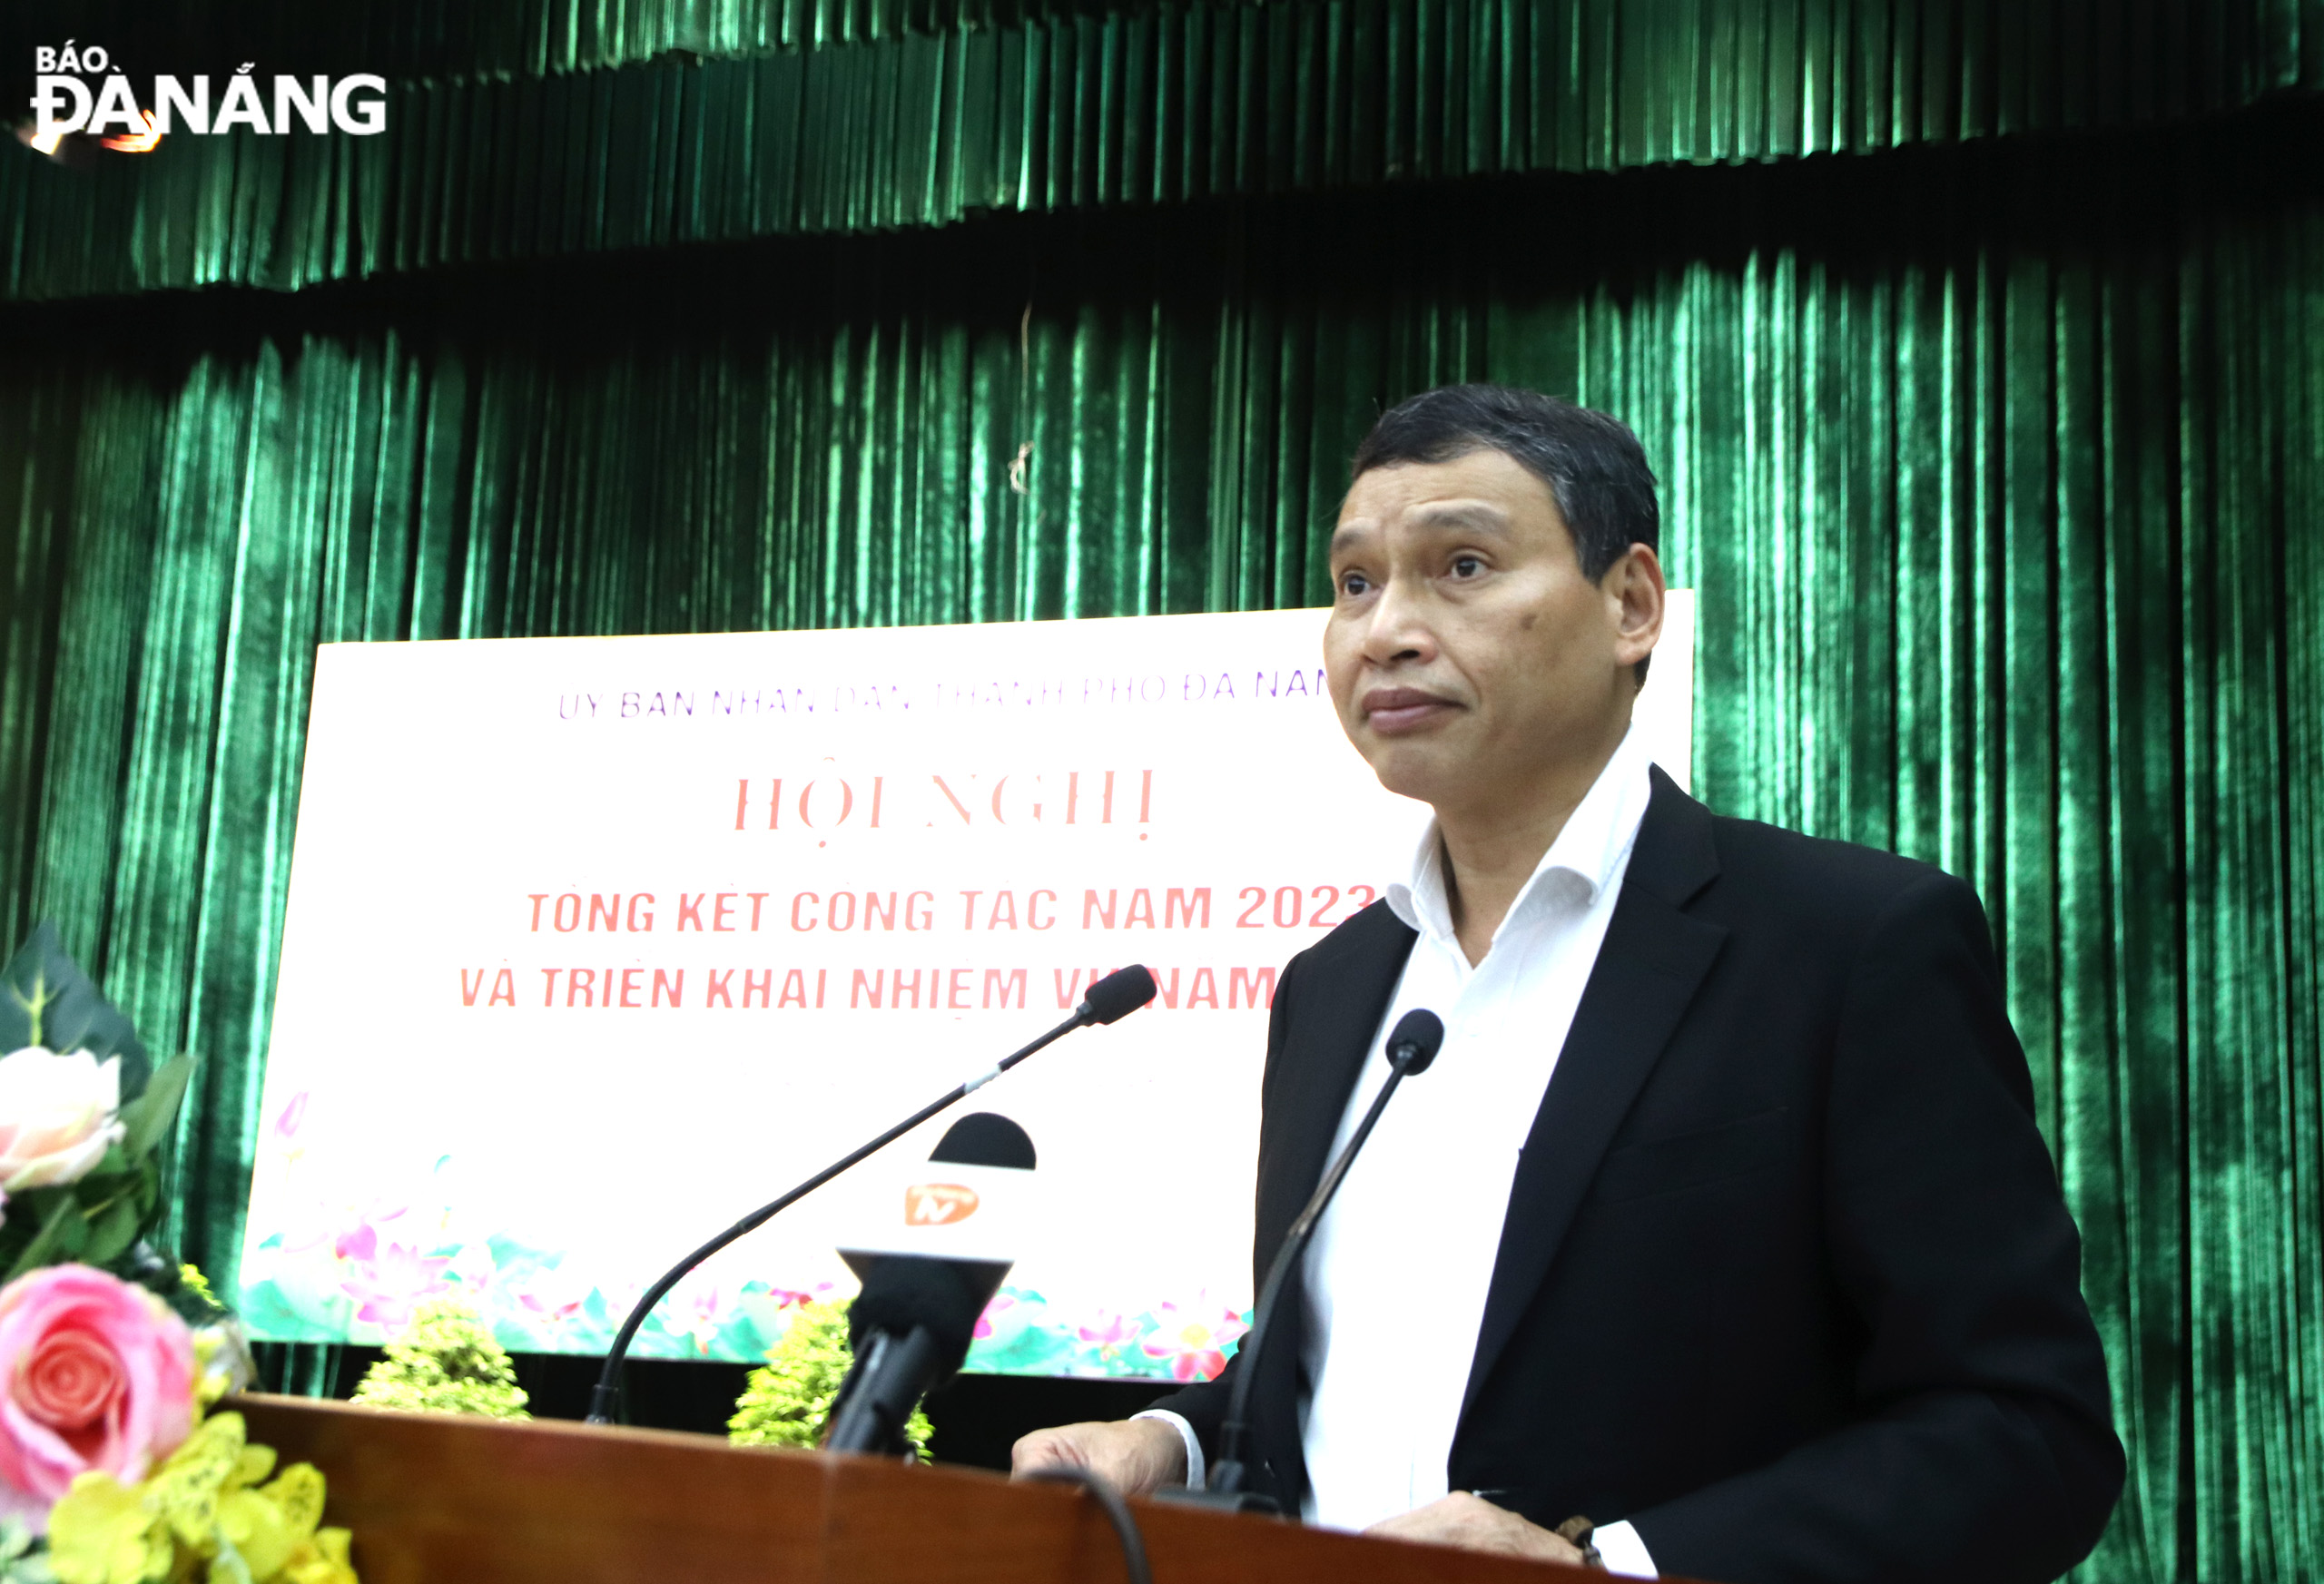 Municipal People’s Committee Vice Chairman Ho Ky Minh